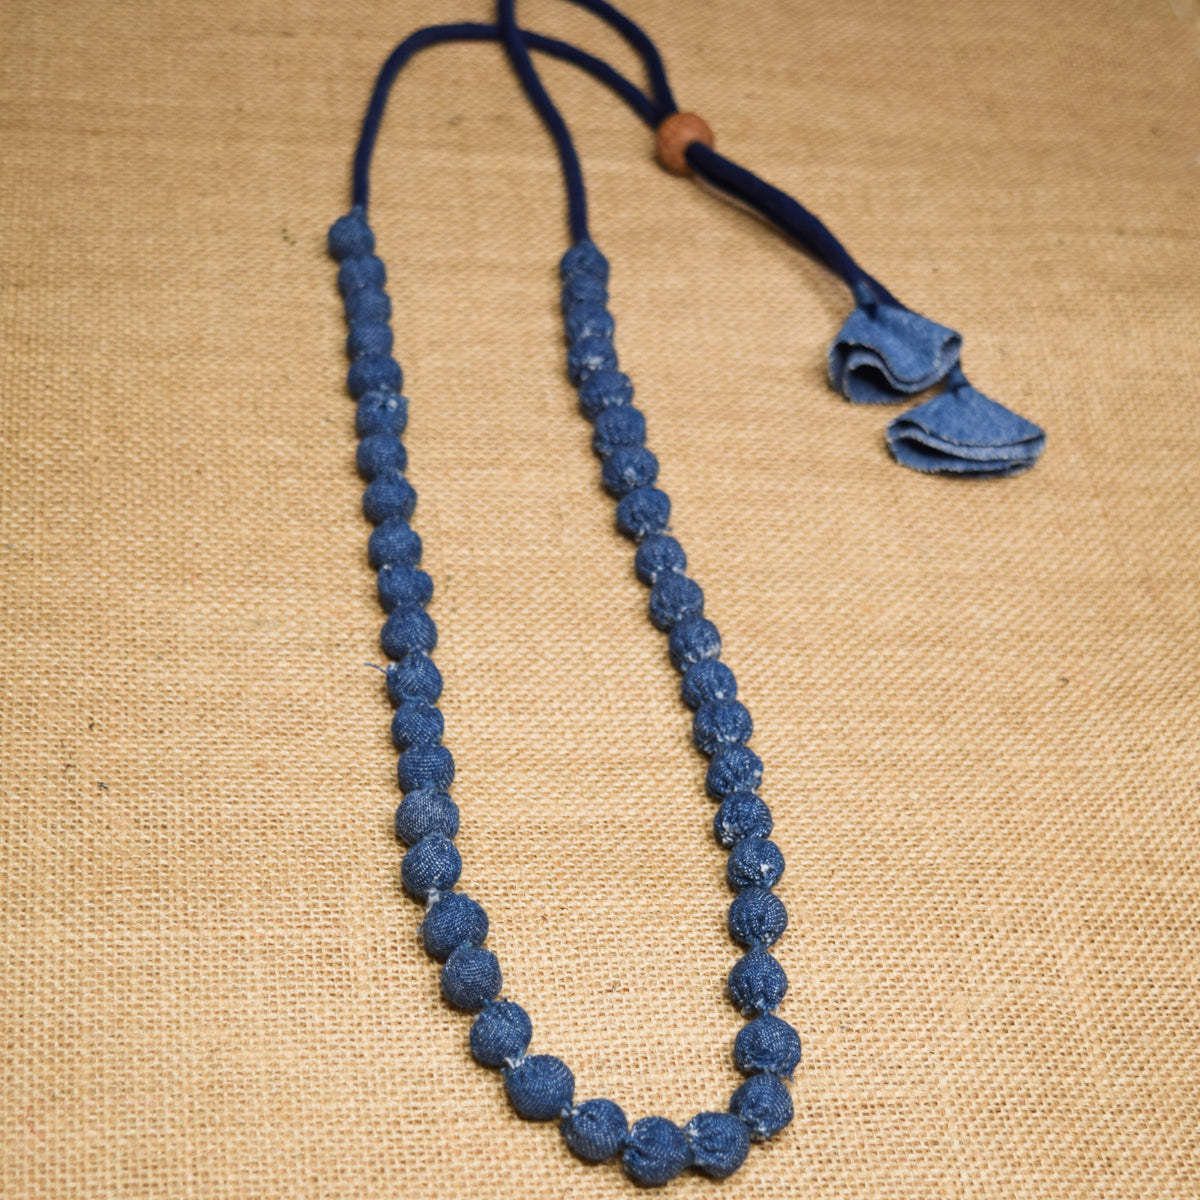 Komaari- Upcycled Denim Necklace by Dwij